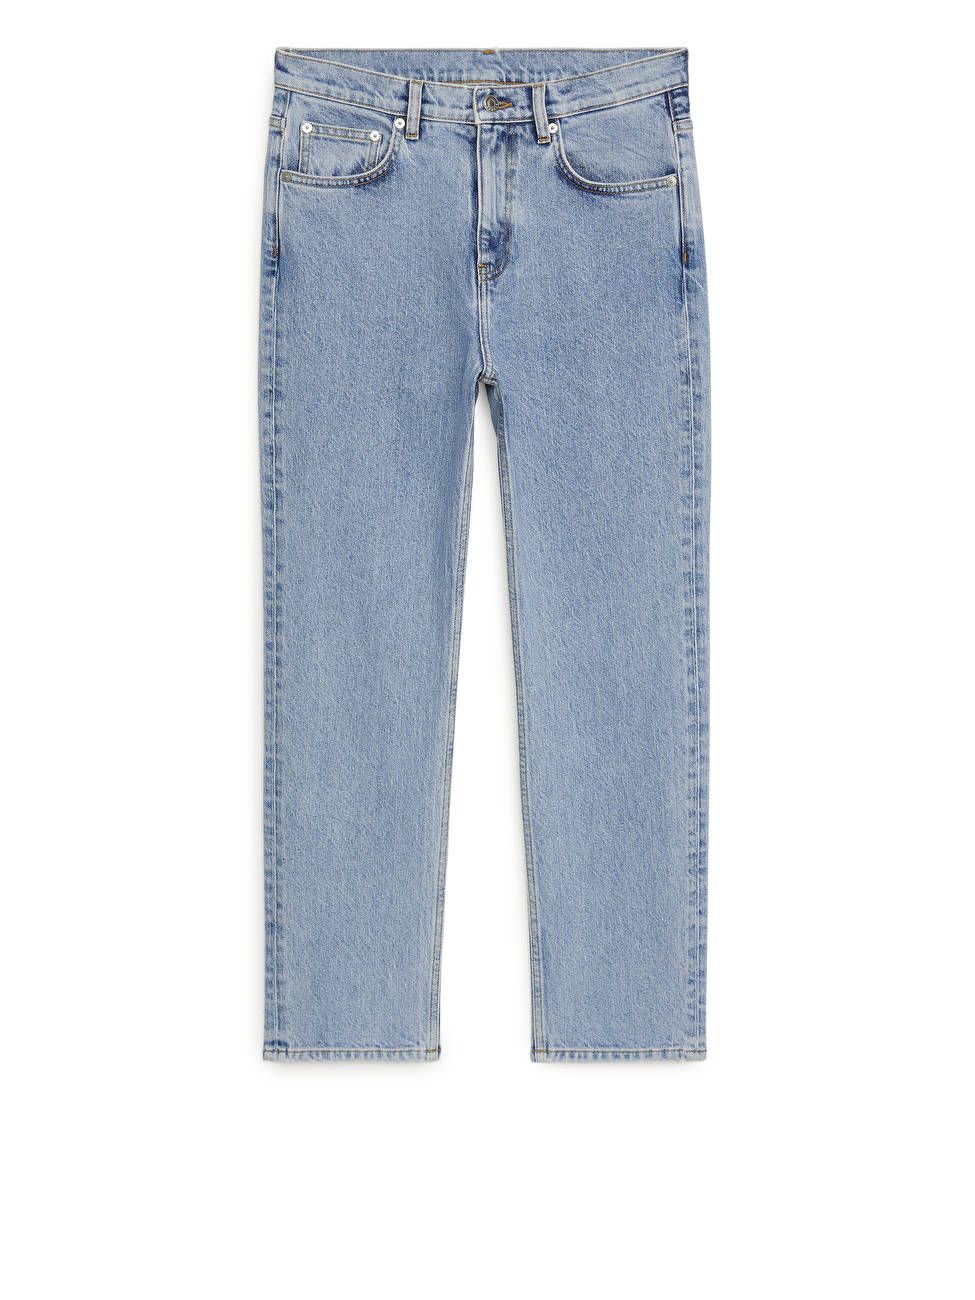 JADE CROPPED Slim Stretch Jeans | ARKET (US&UK)